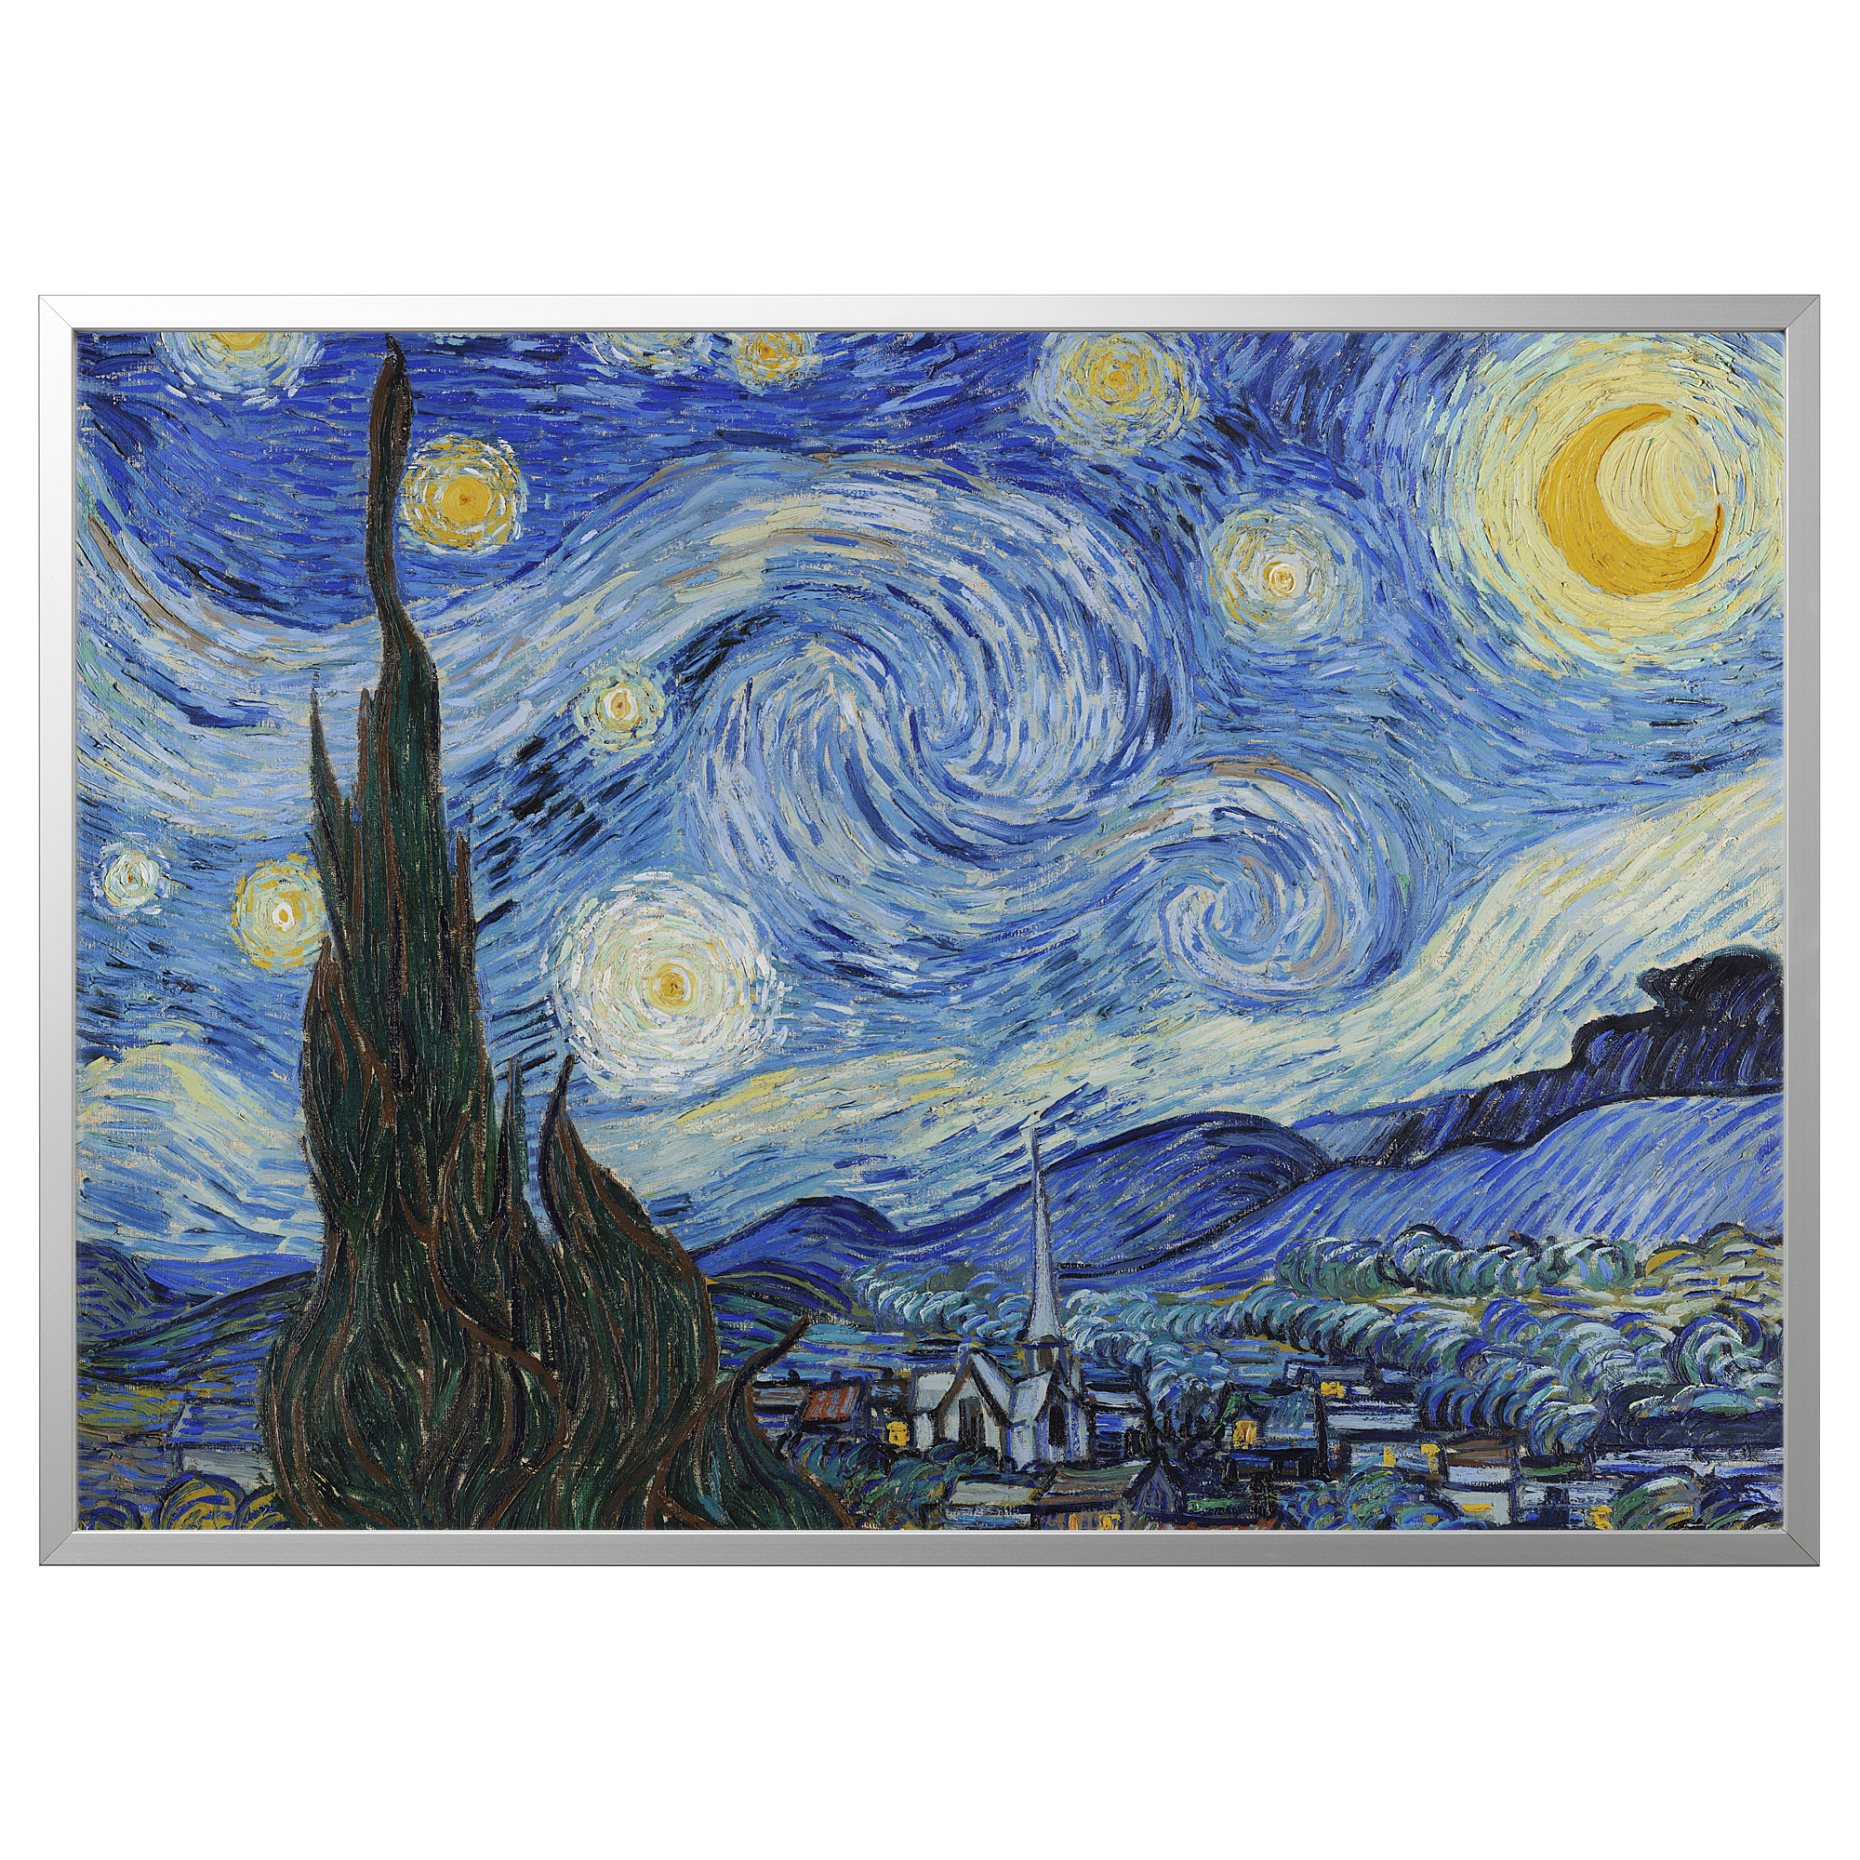 BJÖRKSTA, πίνακας/έναστρη νύχτα, 118x78 cm, 693.846.37